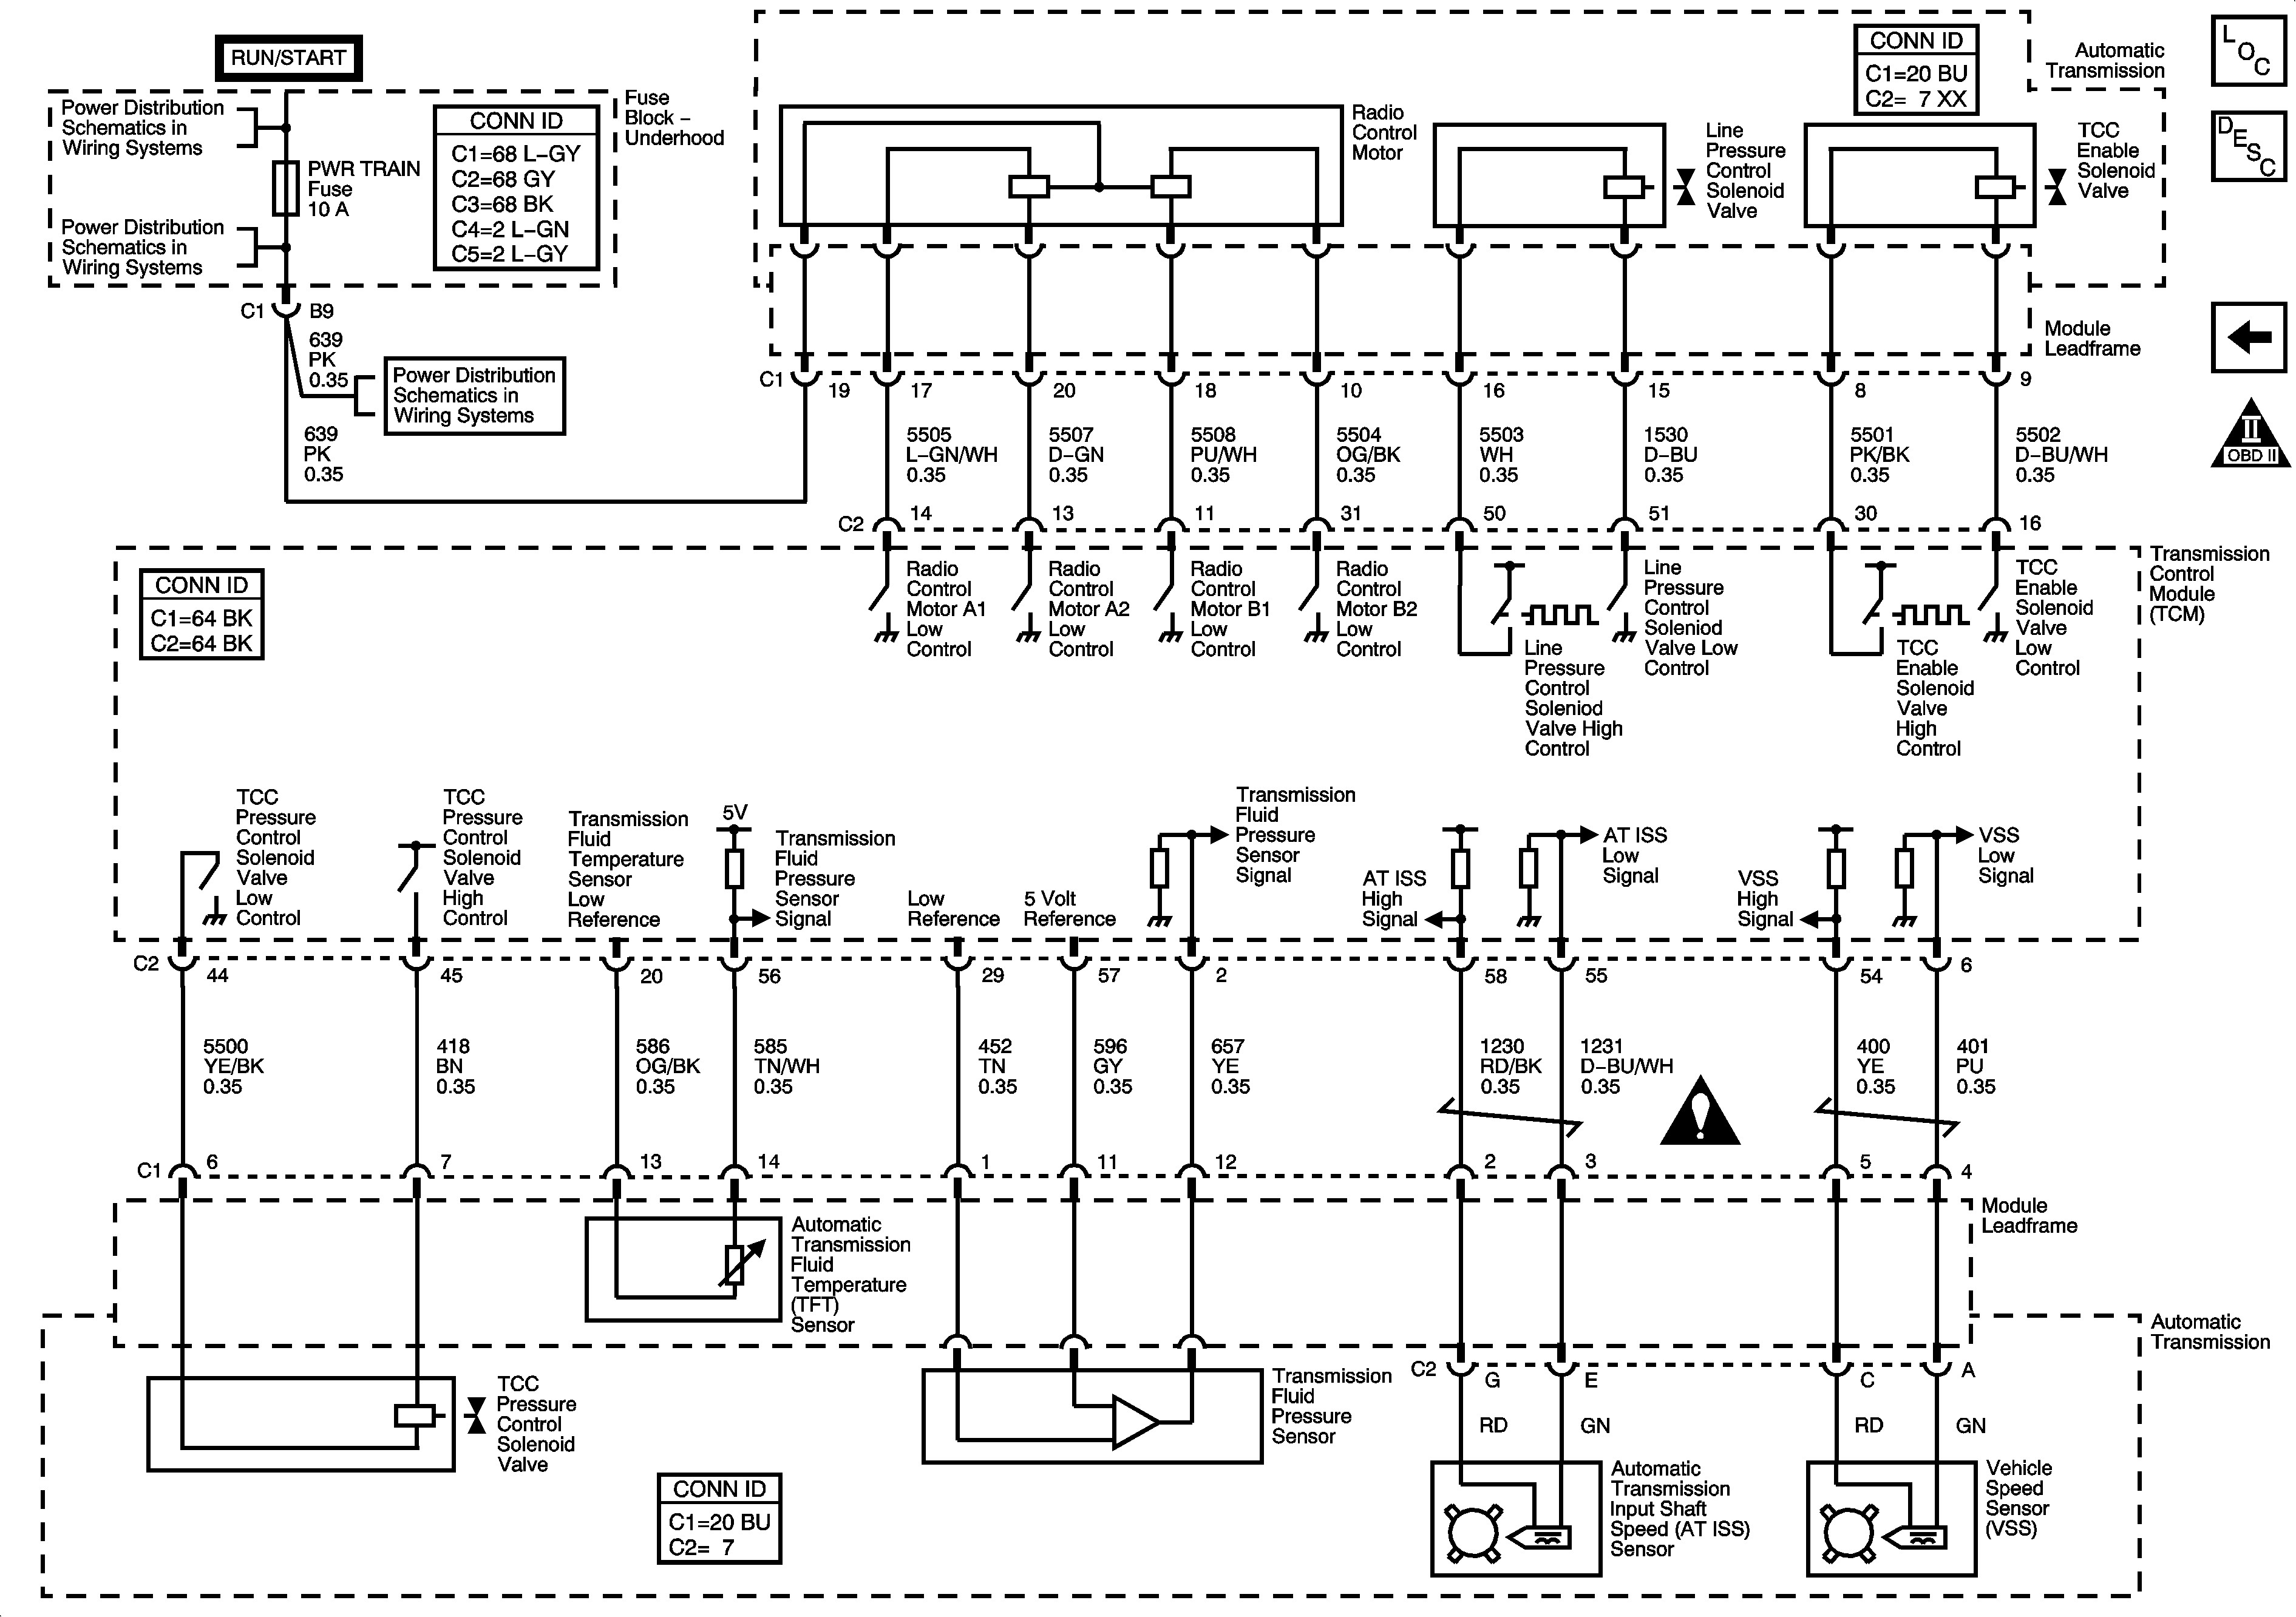 2001 Saturn Sl1 Engine Diagram Saturn Transmission Diagram Wiring Diagrams Of 2001 Saturn Sl1 Engine Diagram